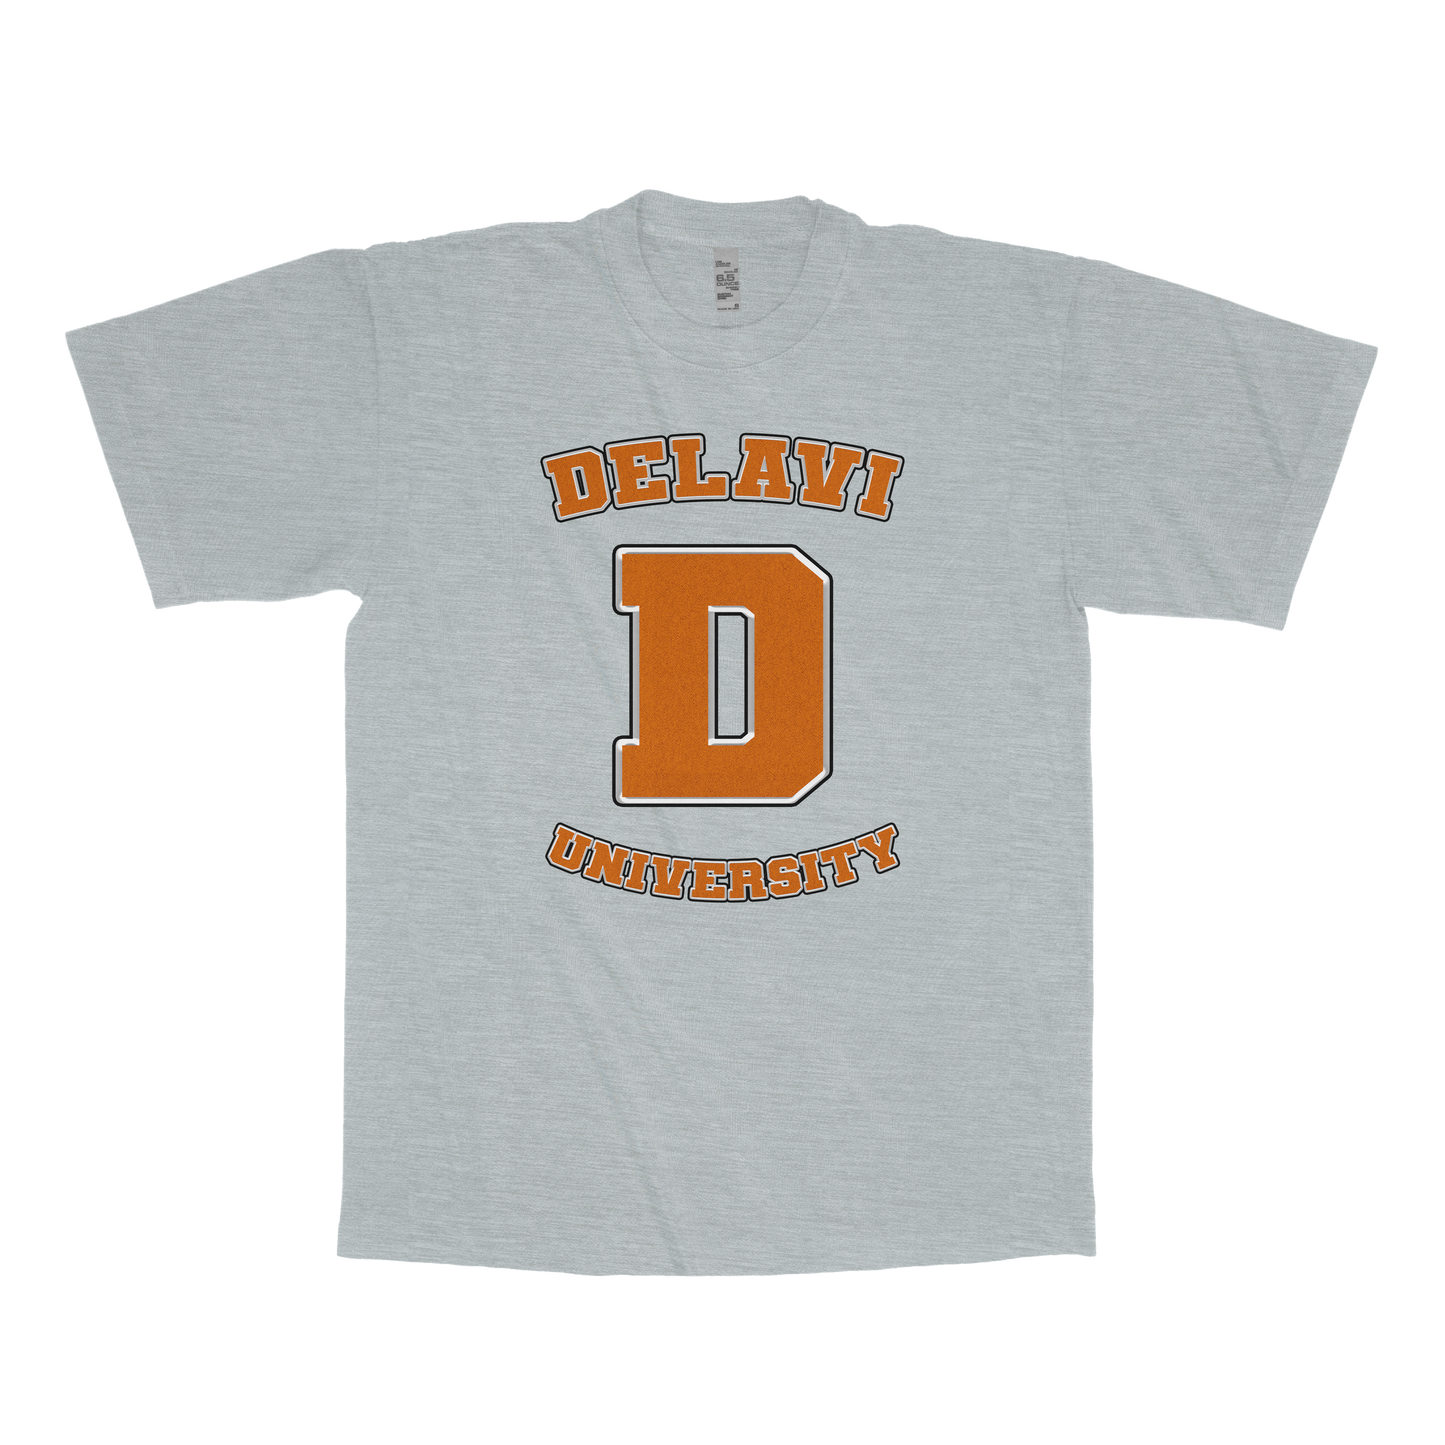 DELAVI - Orange - University (FAKE U T-Shirt)